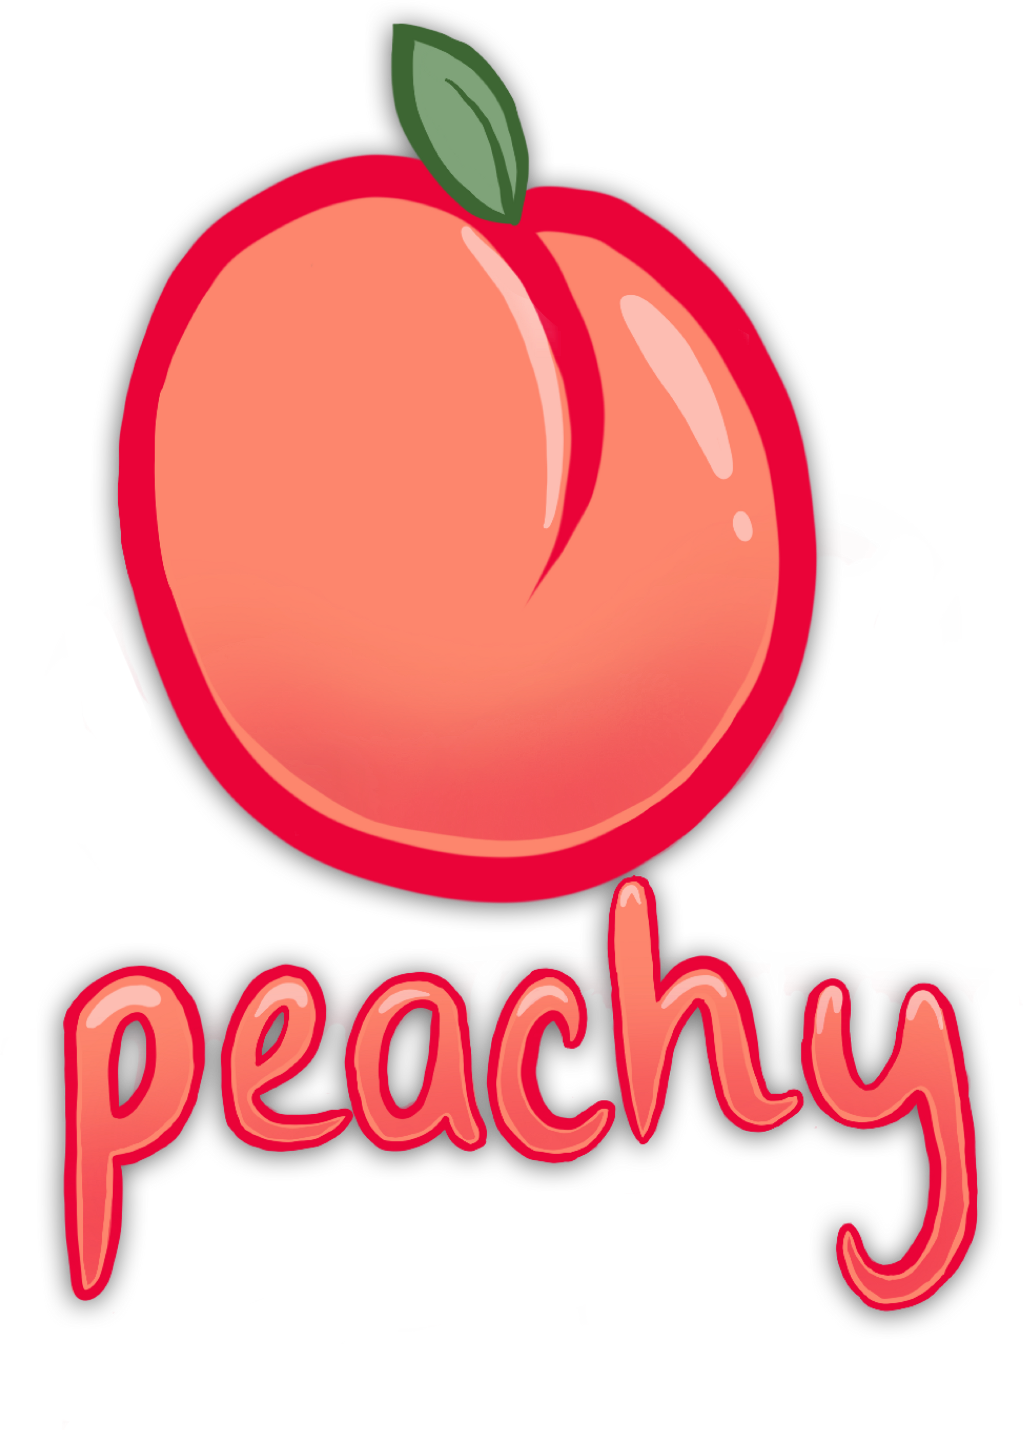 Interesting Art Peach Peachy Artistic Pink Report Ⓒ - Interesting Art Peach Peachy Artistic Pink Report Ⓒ (1024x1430)